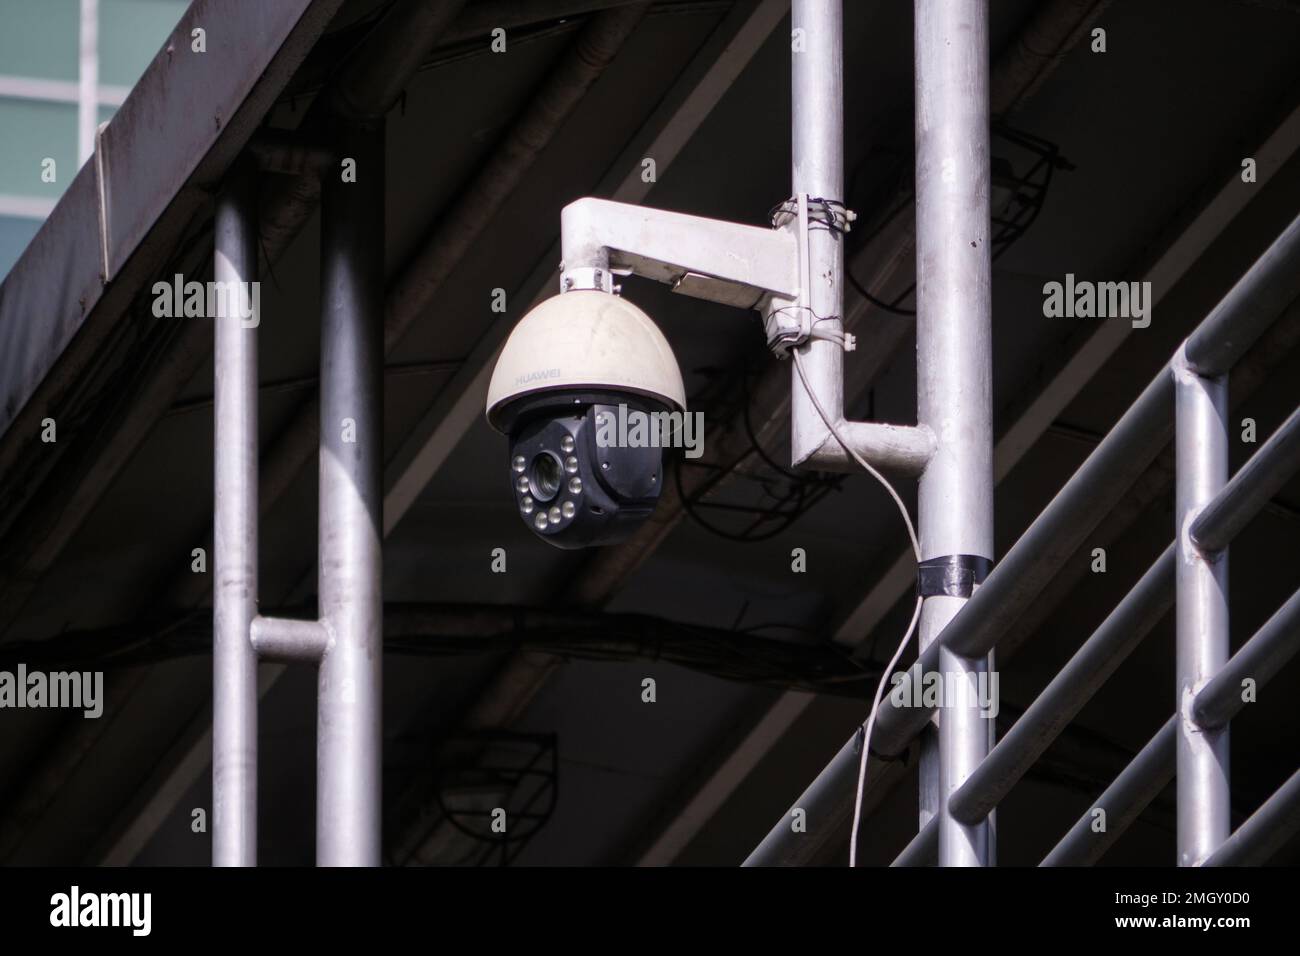 CCTV to monitor traffic violations Stock Photo